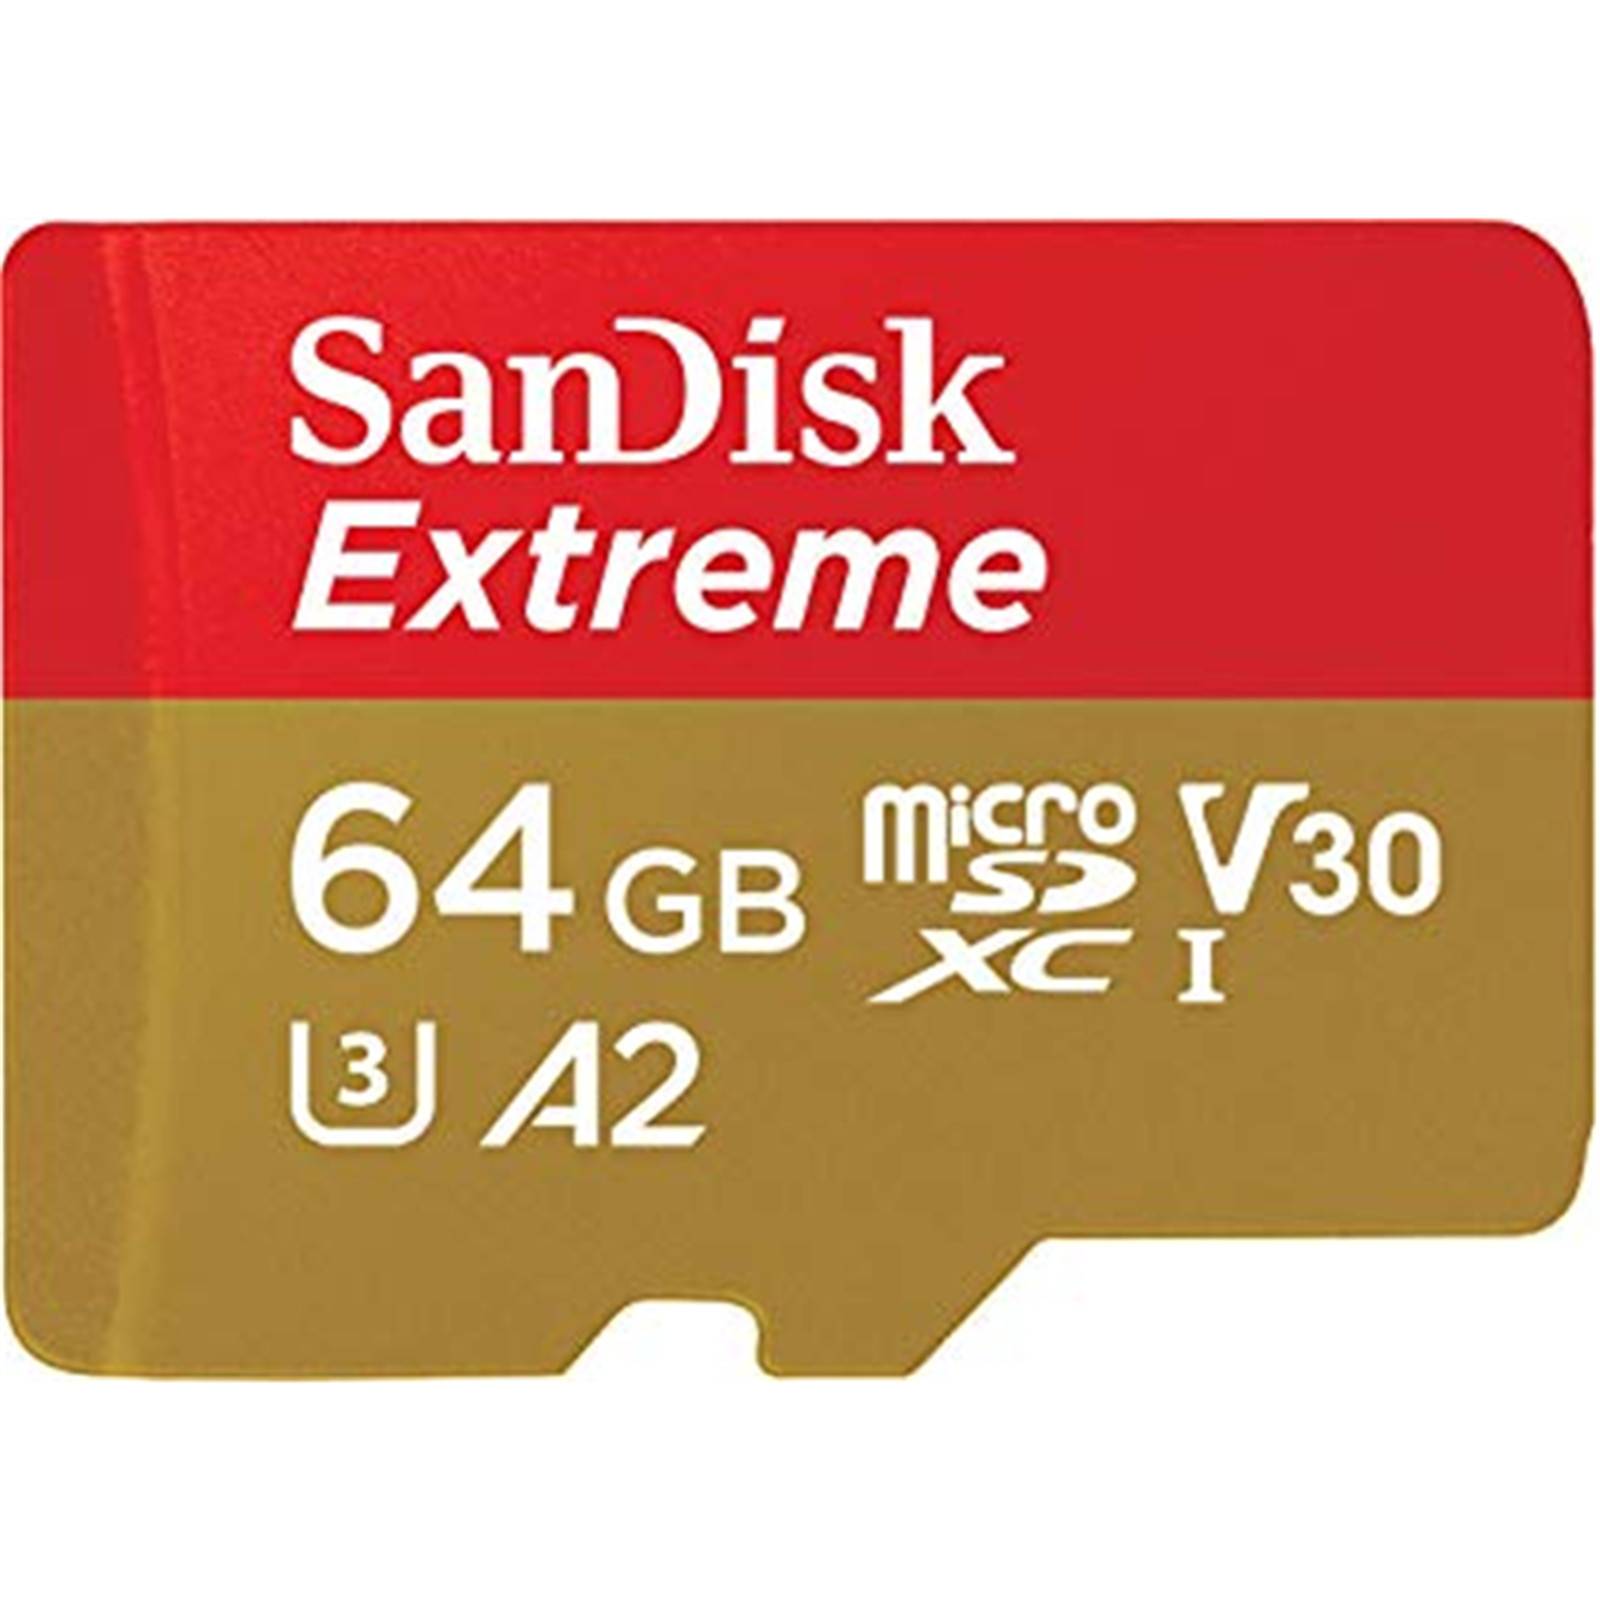 SanDisk MicroSD Extreme UHS-I microSDHC/microSDXC Memory Card - 64GB